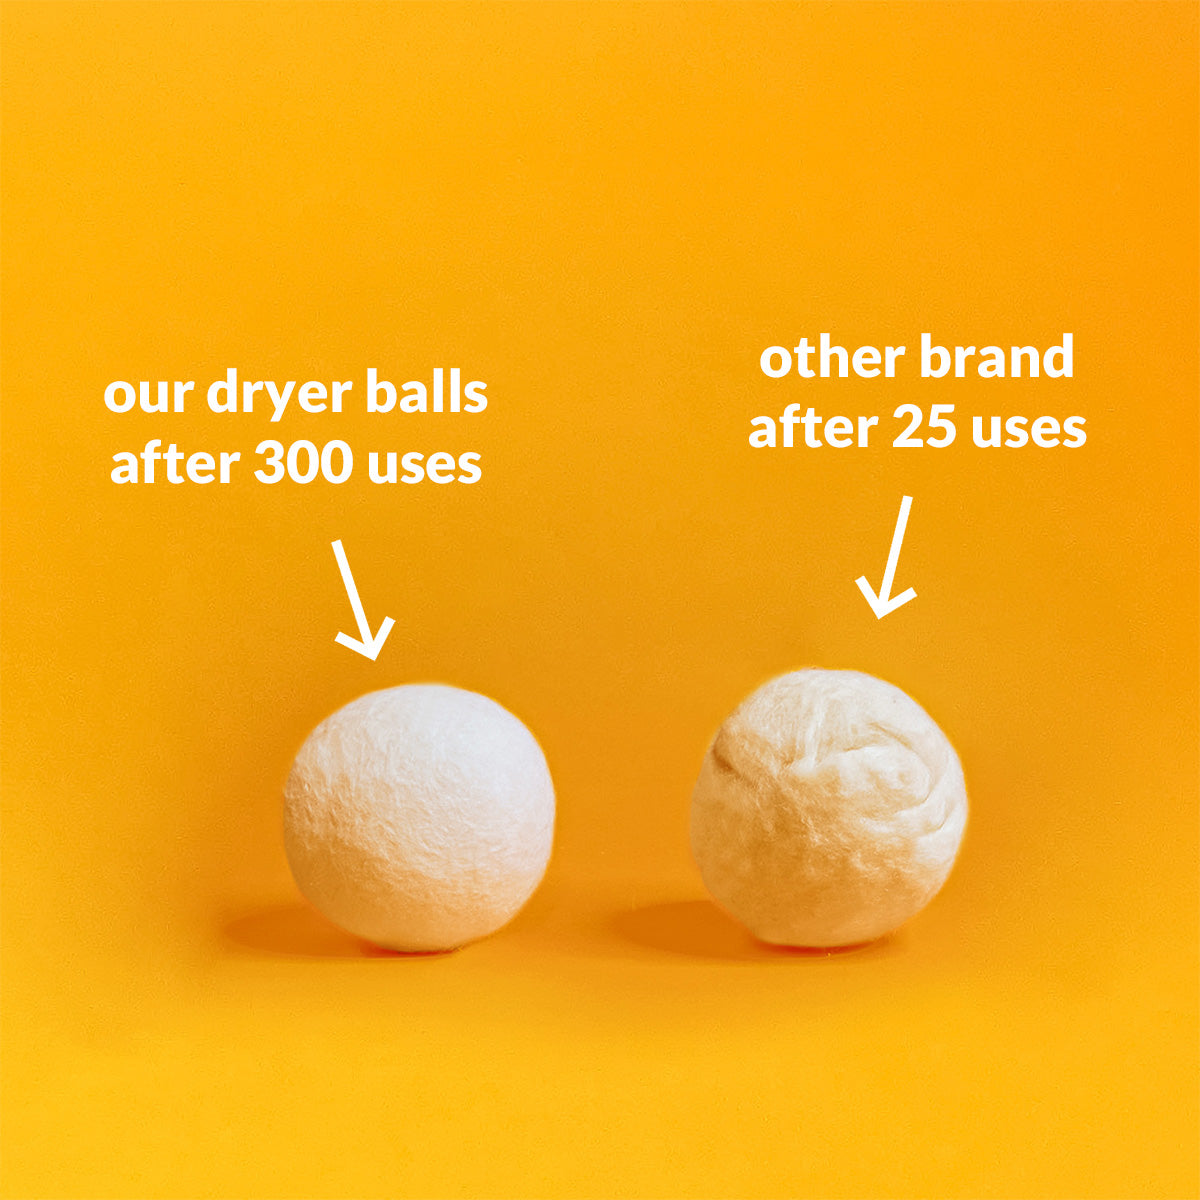 Woolzies Dryer Balls & Essential Oil, Combo Pack - 3 balls